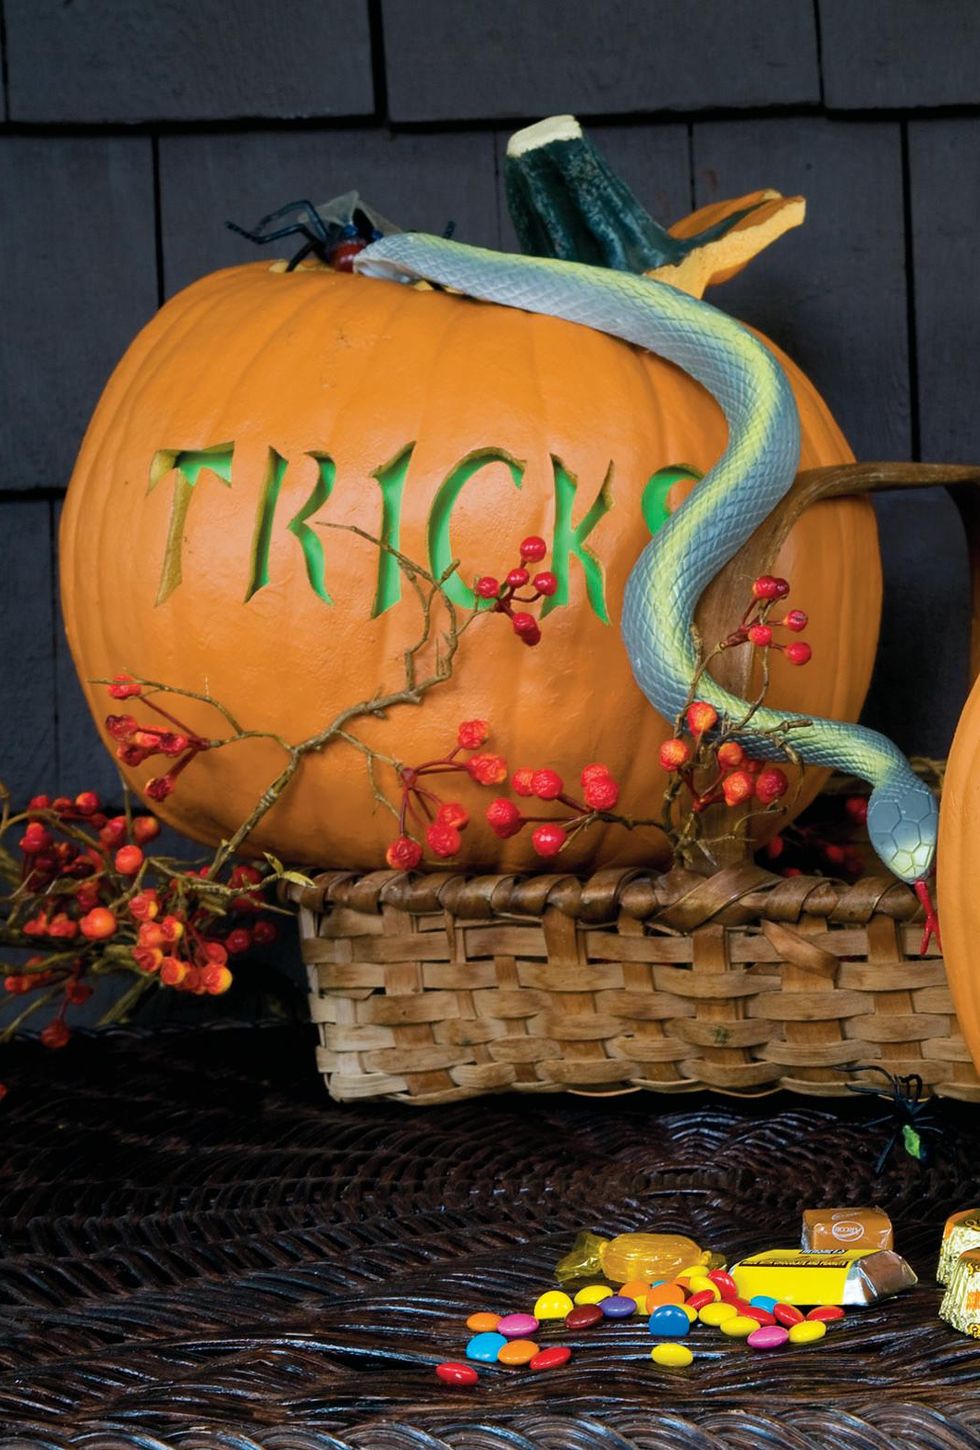 pumpkin carving ideas tricks and treats